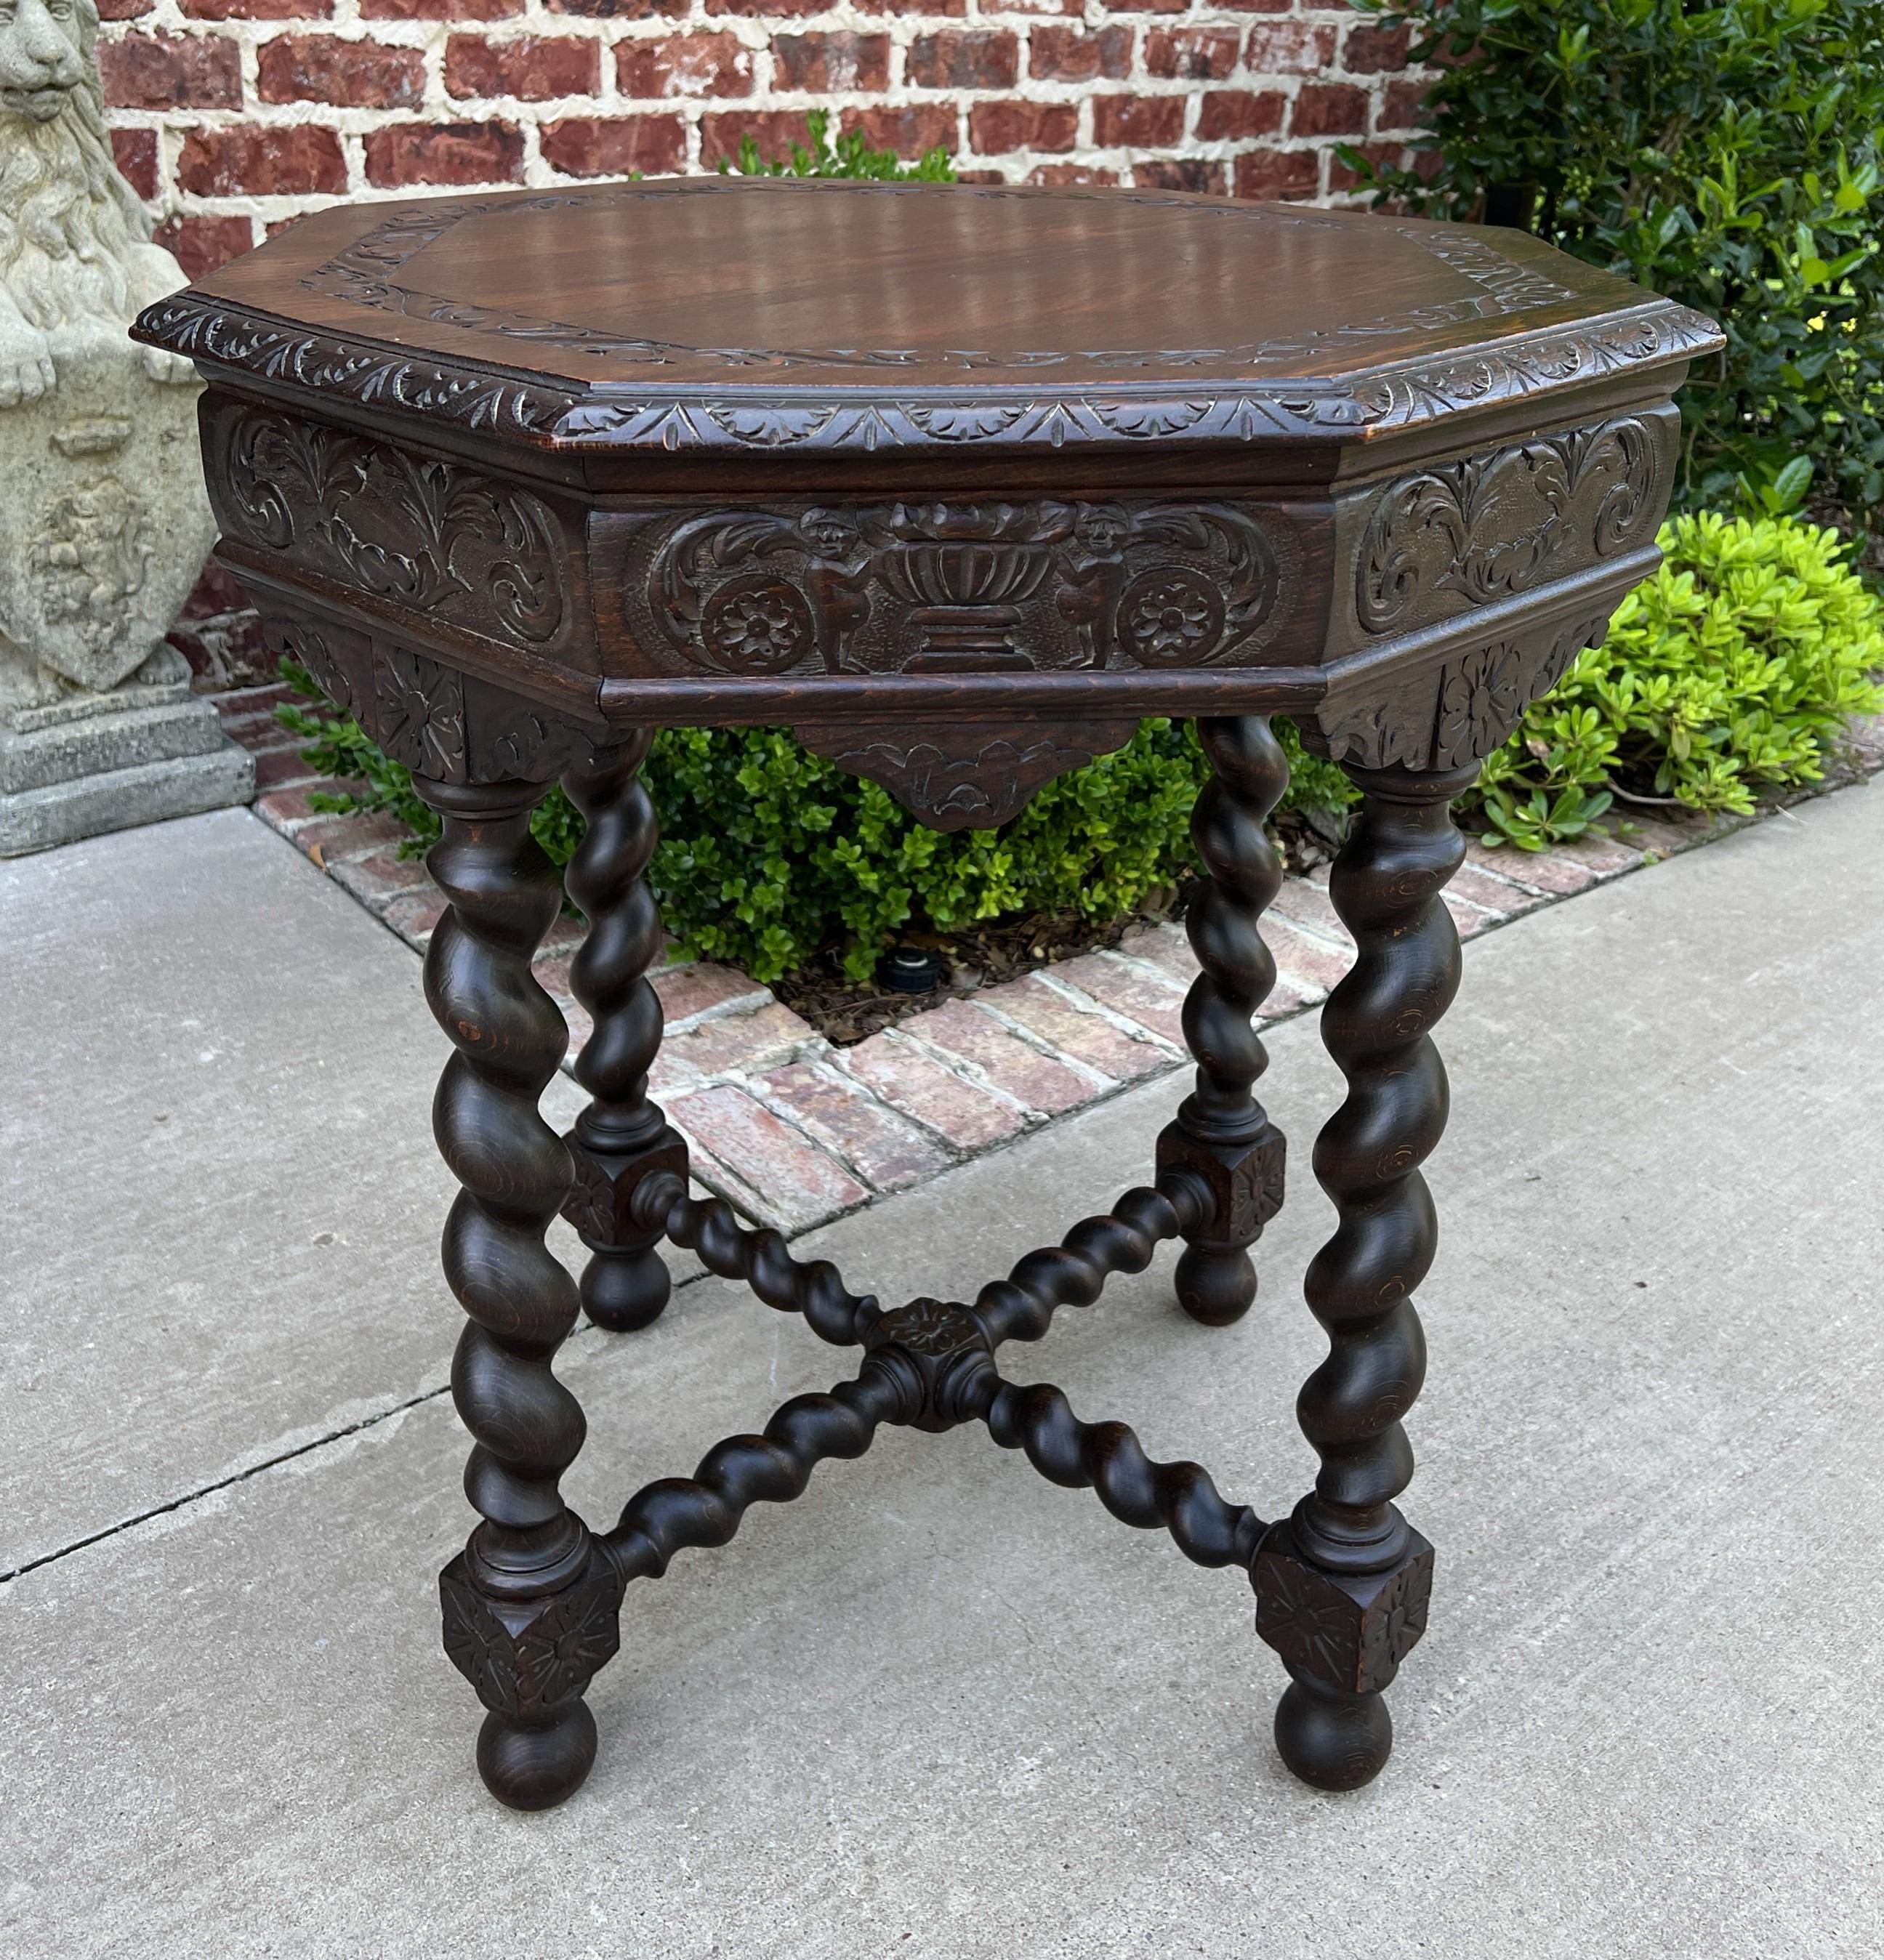 Antique French Table Barley Twist Octagonal Renaissance Revival Oak Carved 19thc For Sale 7